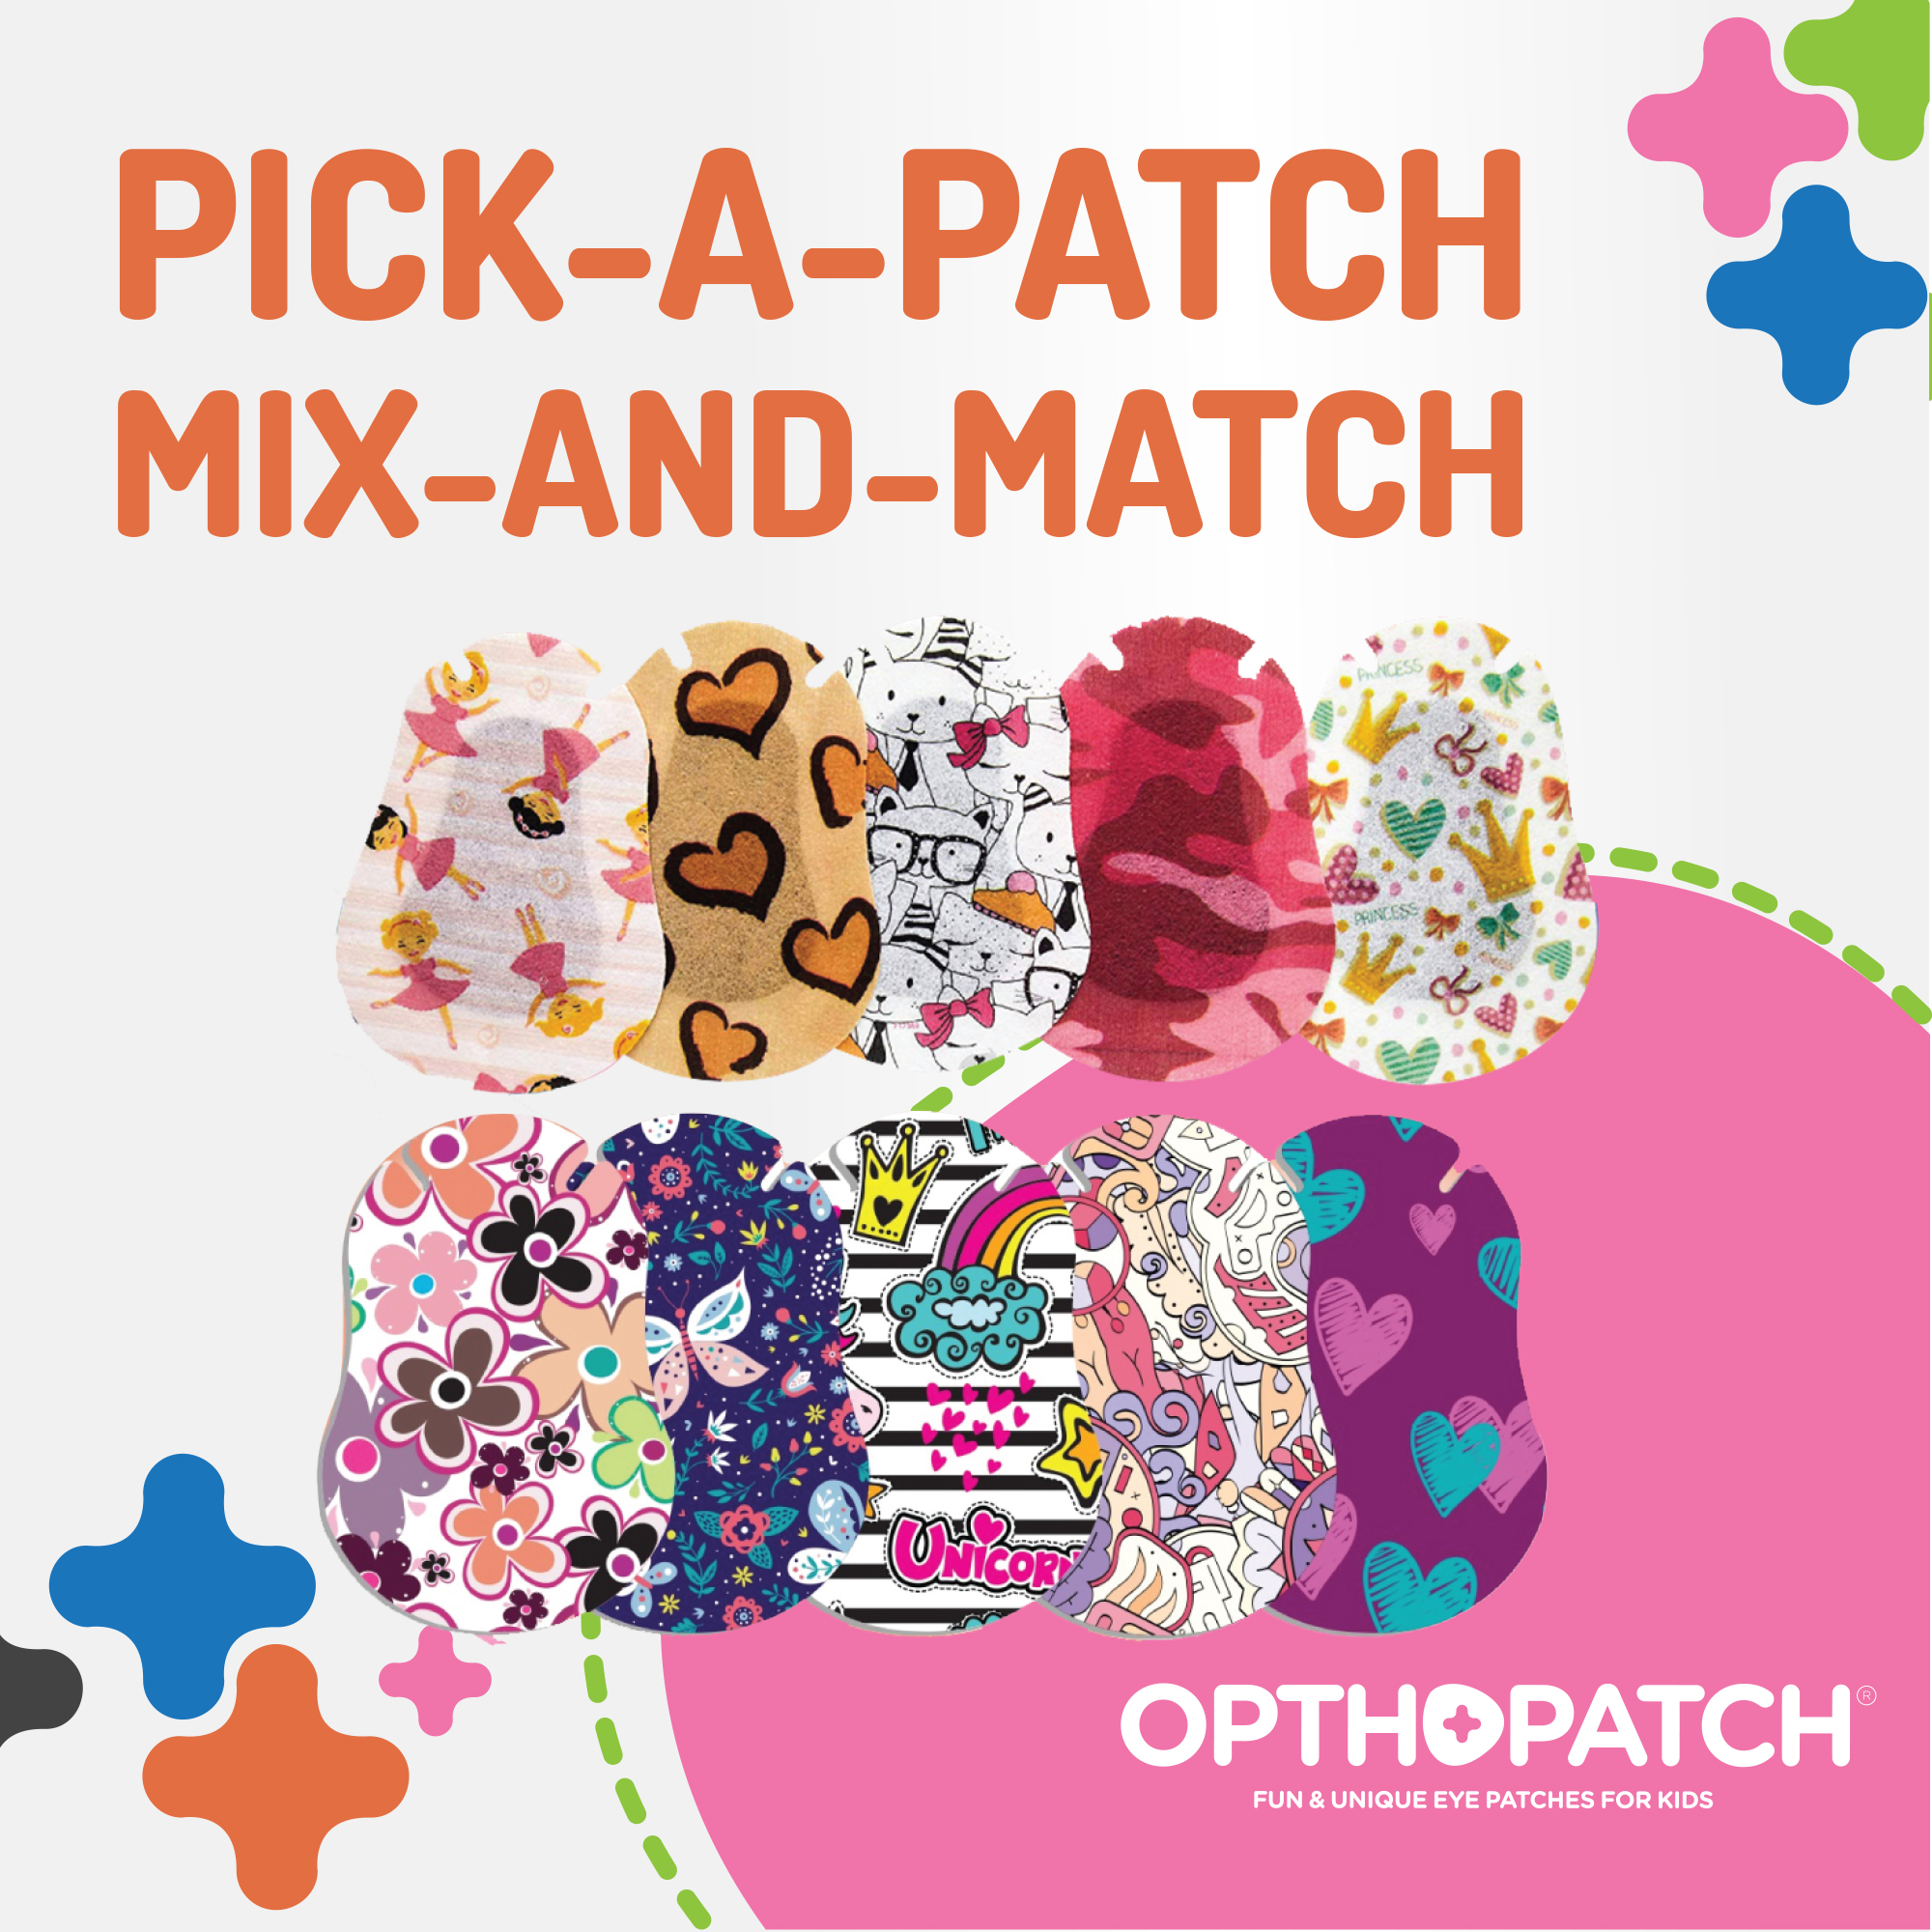 Pick a patch